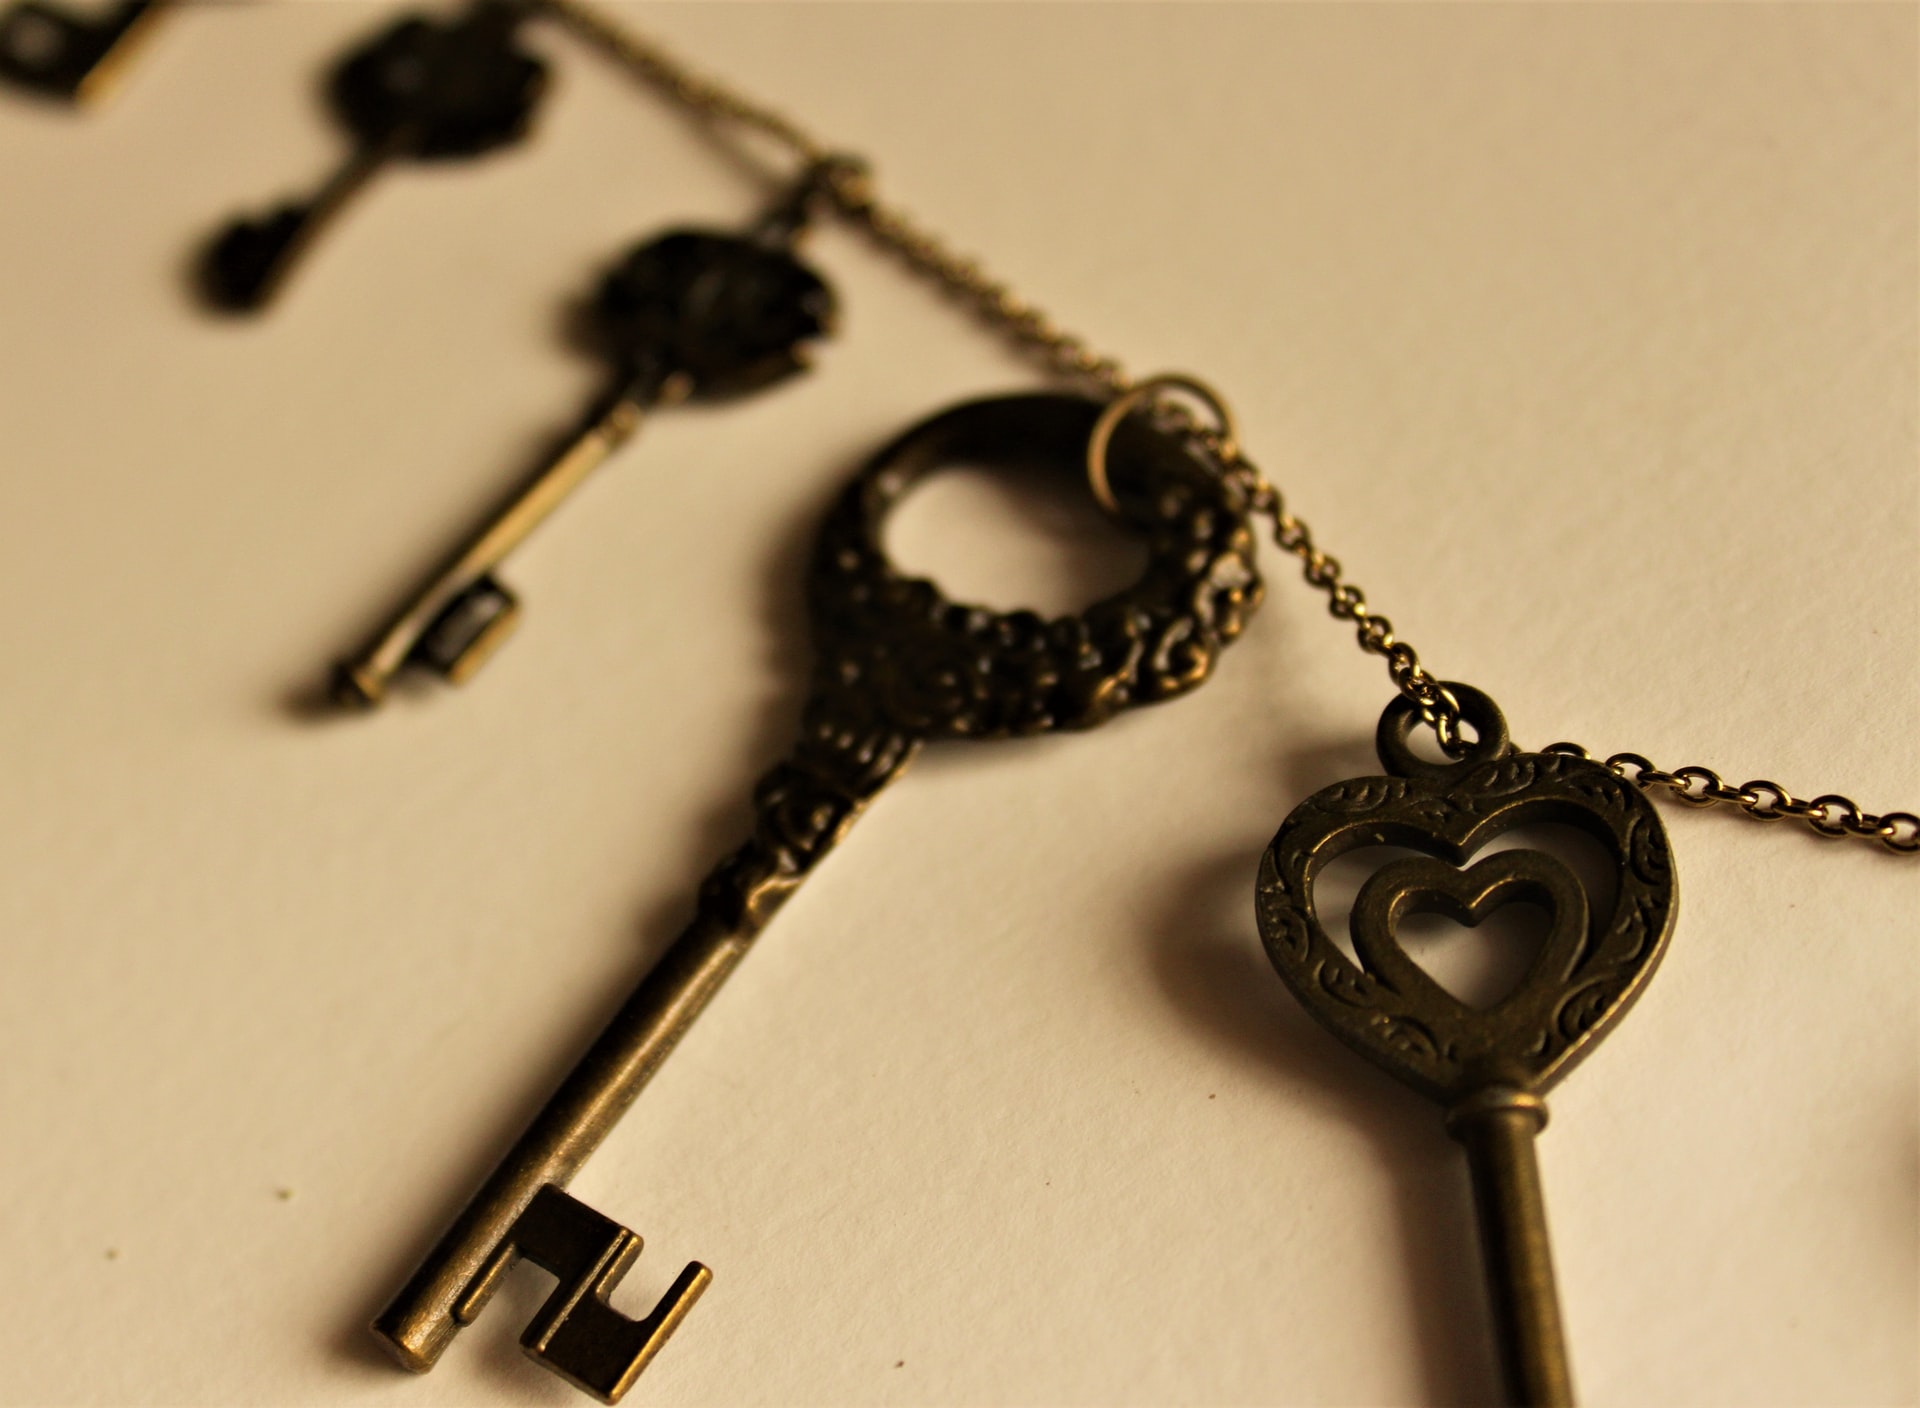 Four decorative keys on chain.